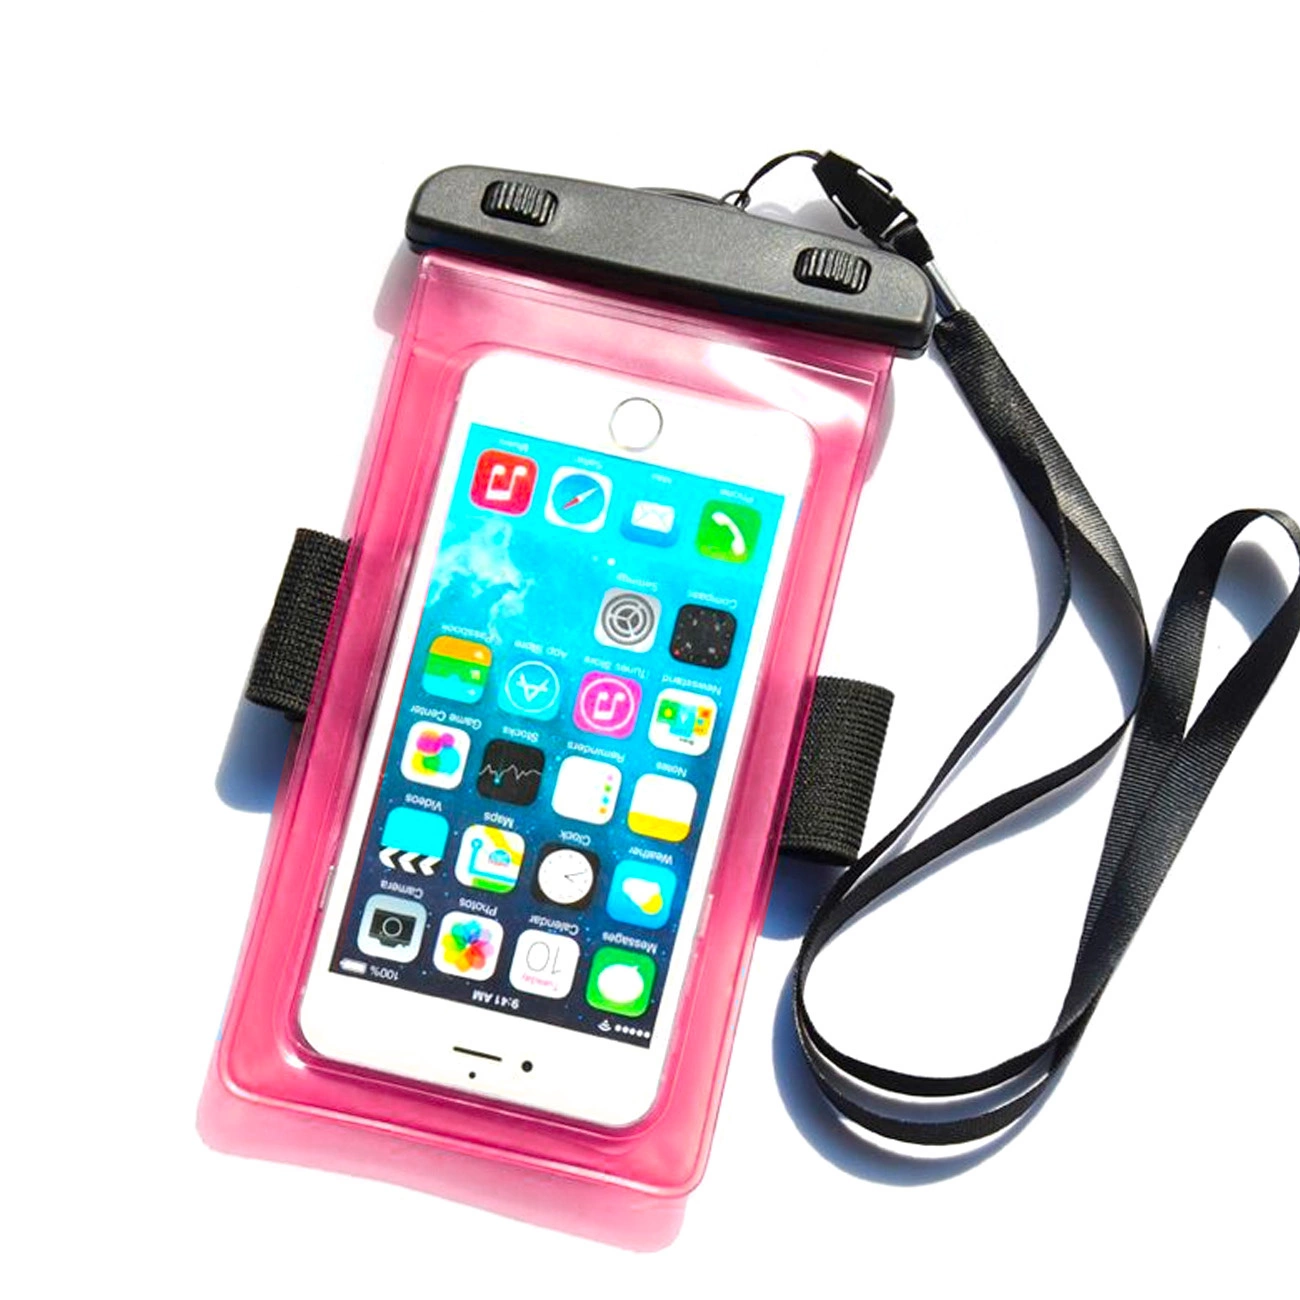 Hurtel Vodotěsné PVC pouzdro na telefon na paži - růžové